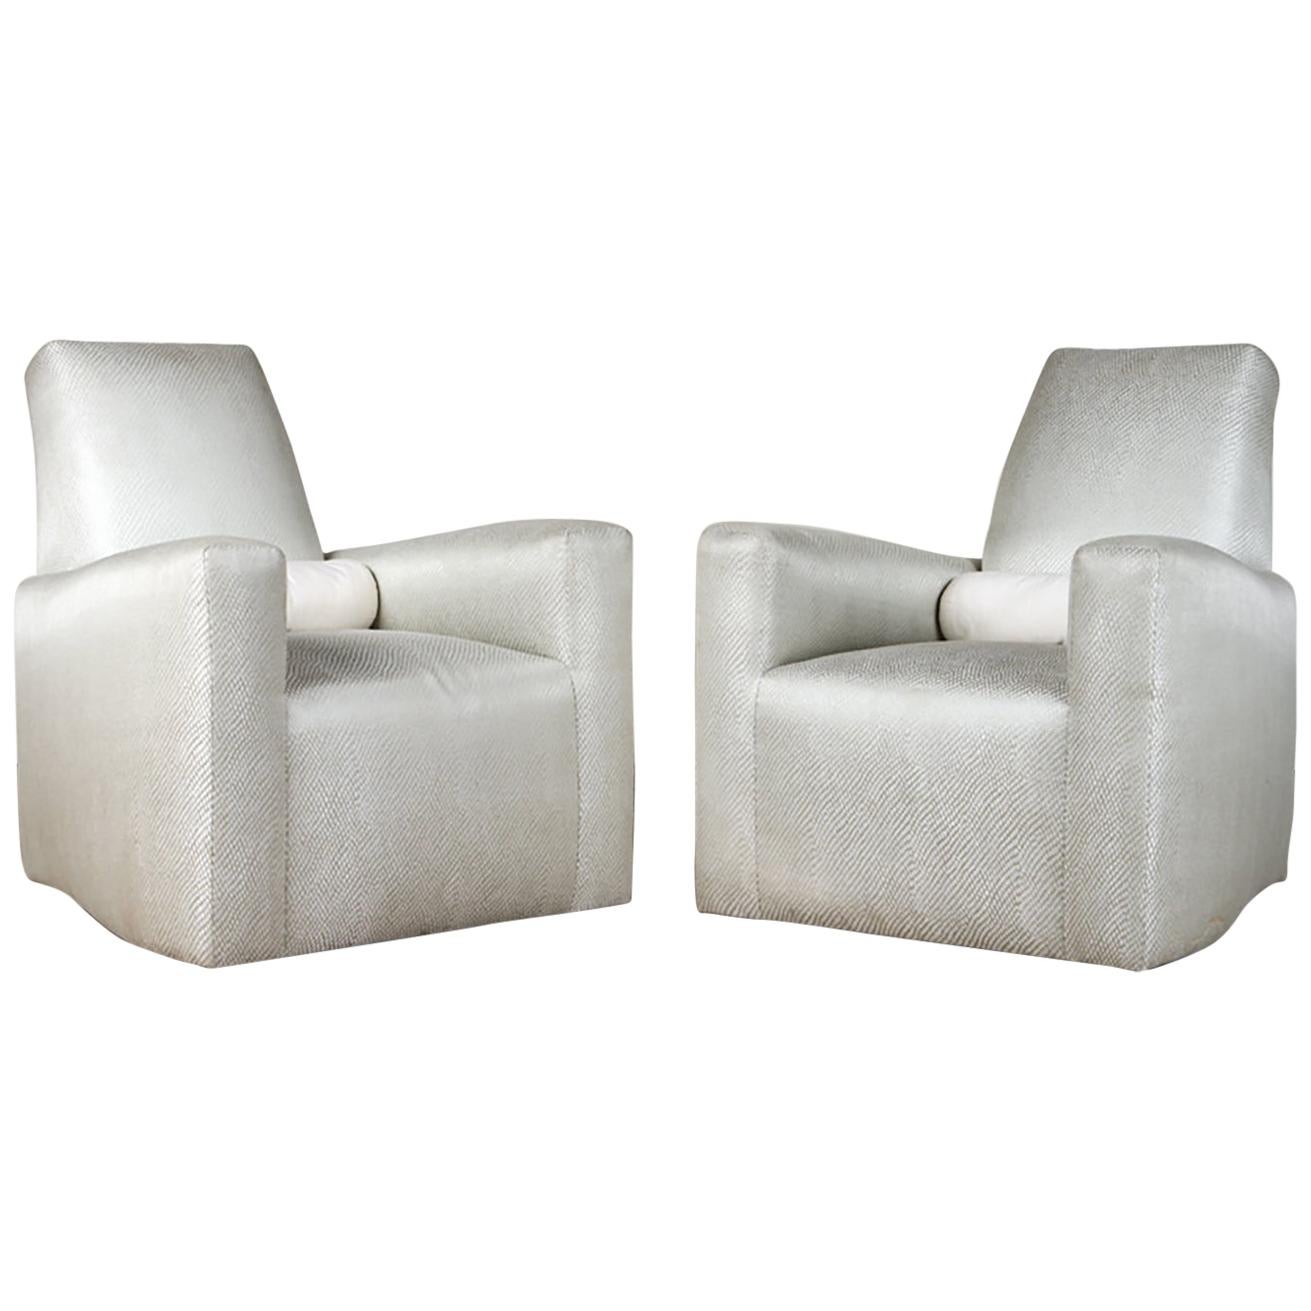 Stunning Pair of Geoffrey Bradfield Custom Club Chairs in a Woven Silver Fabric